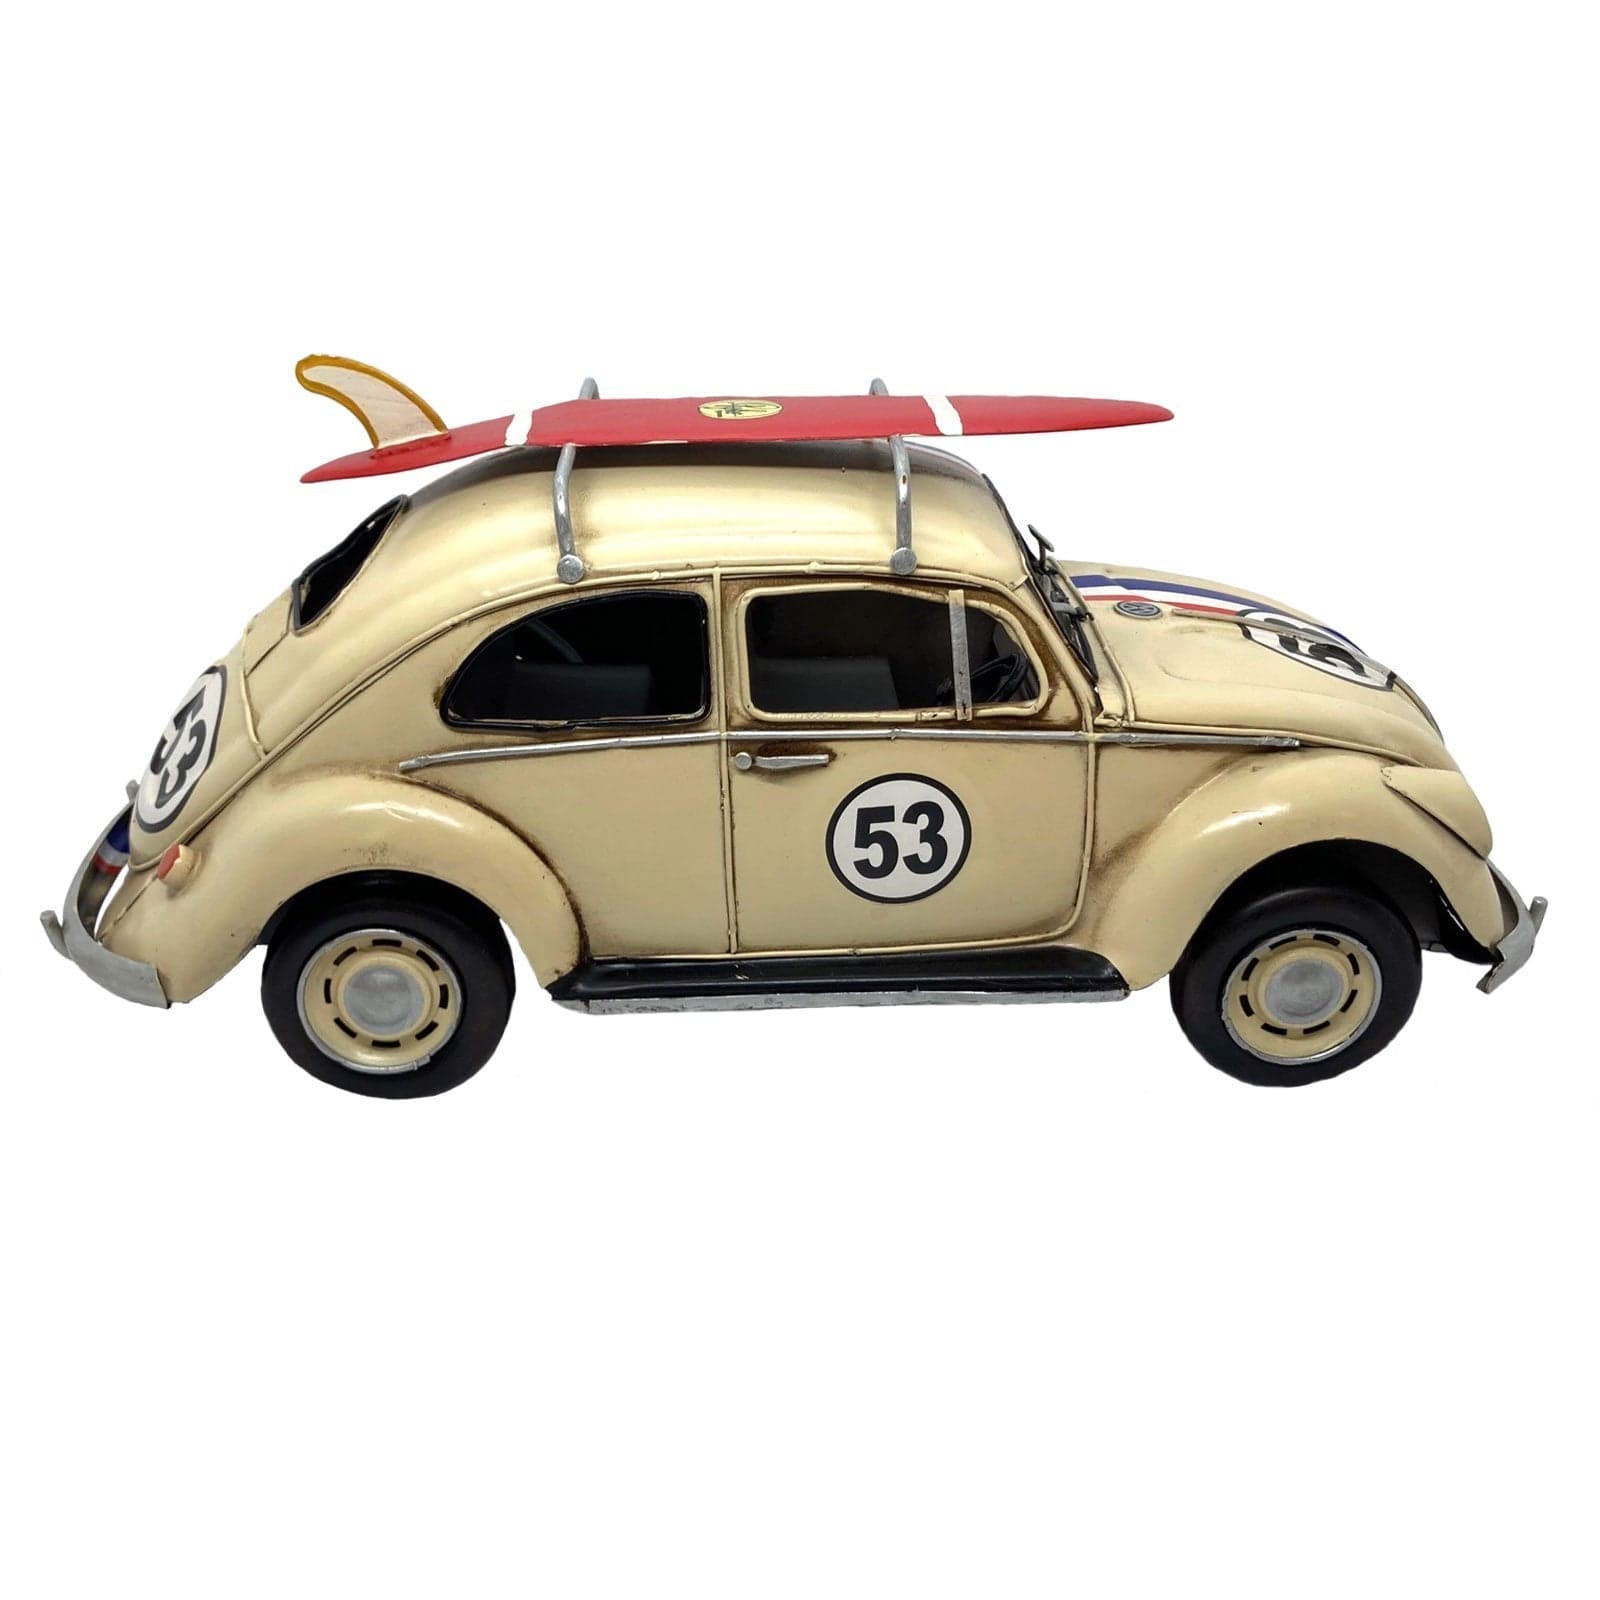 34cm Racing Stripe VW Beetle with Surfboard